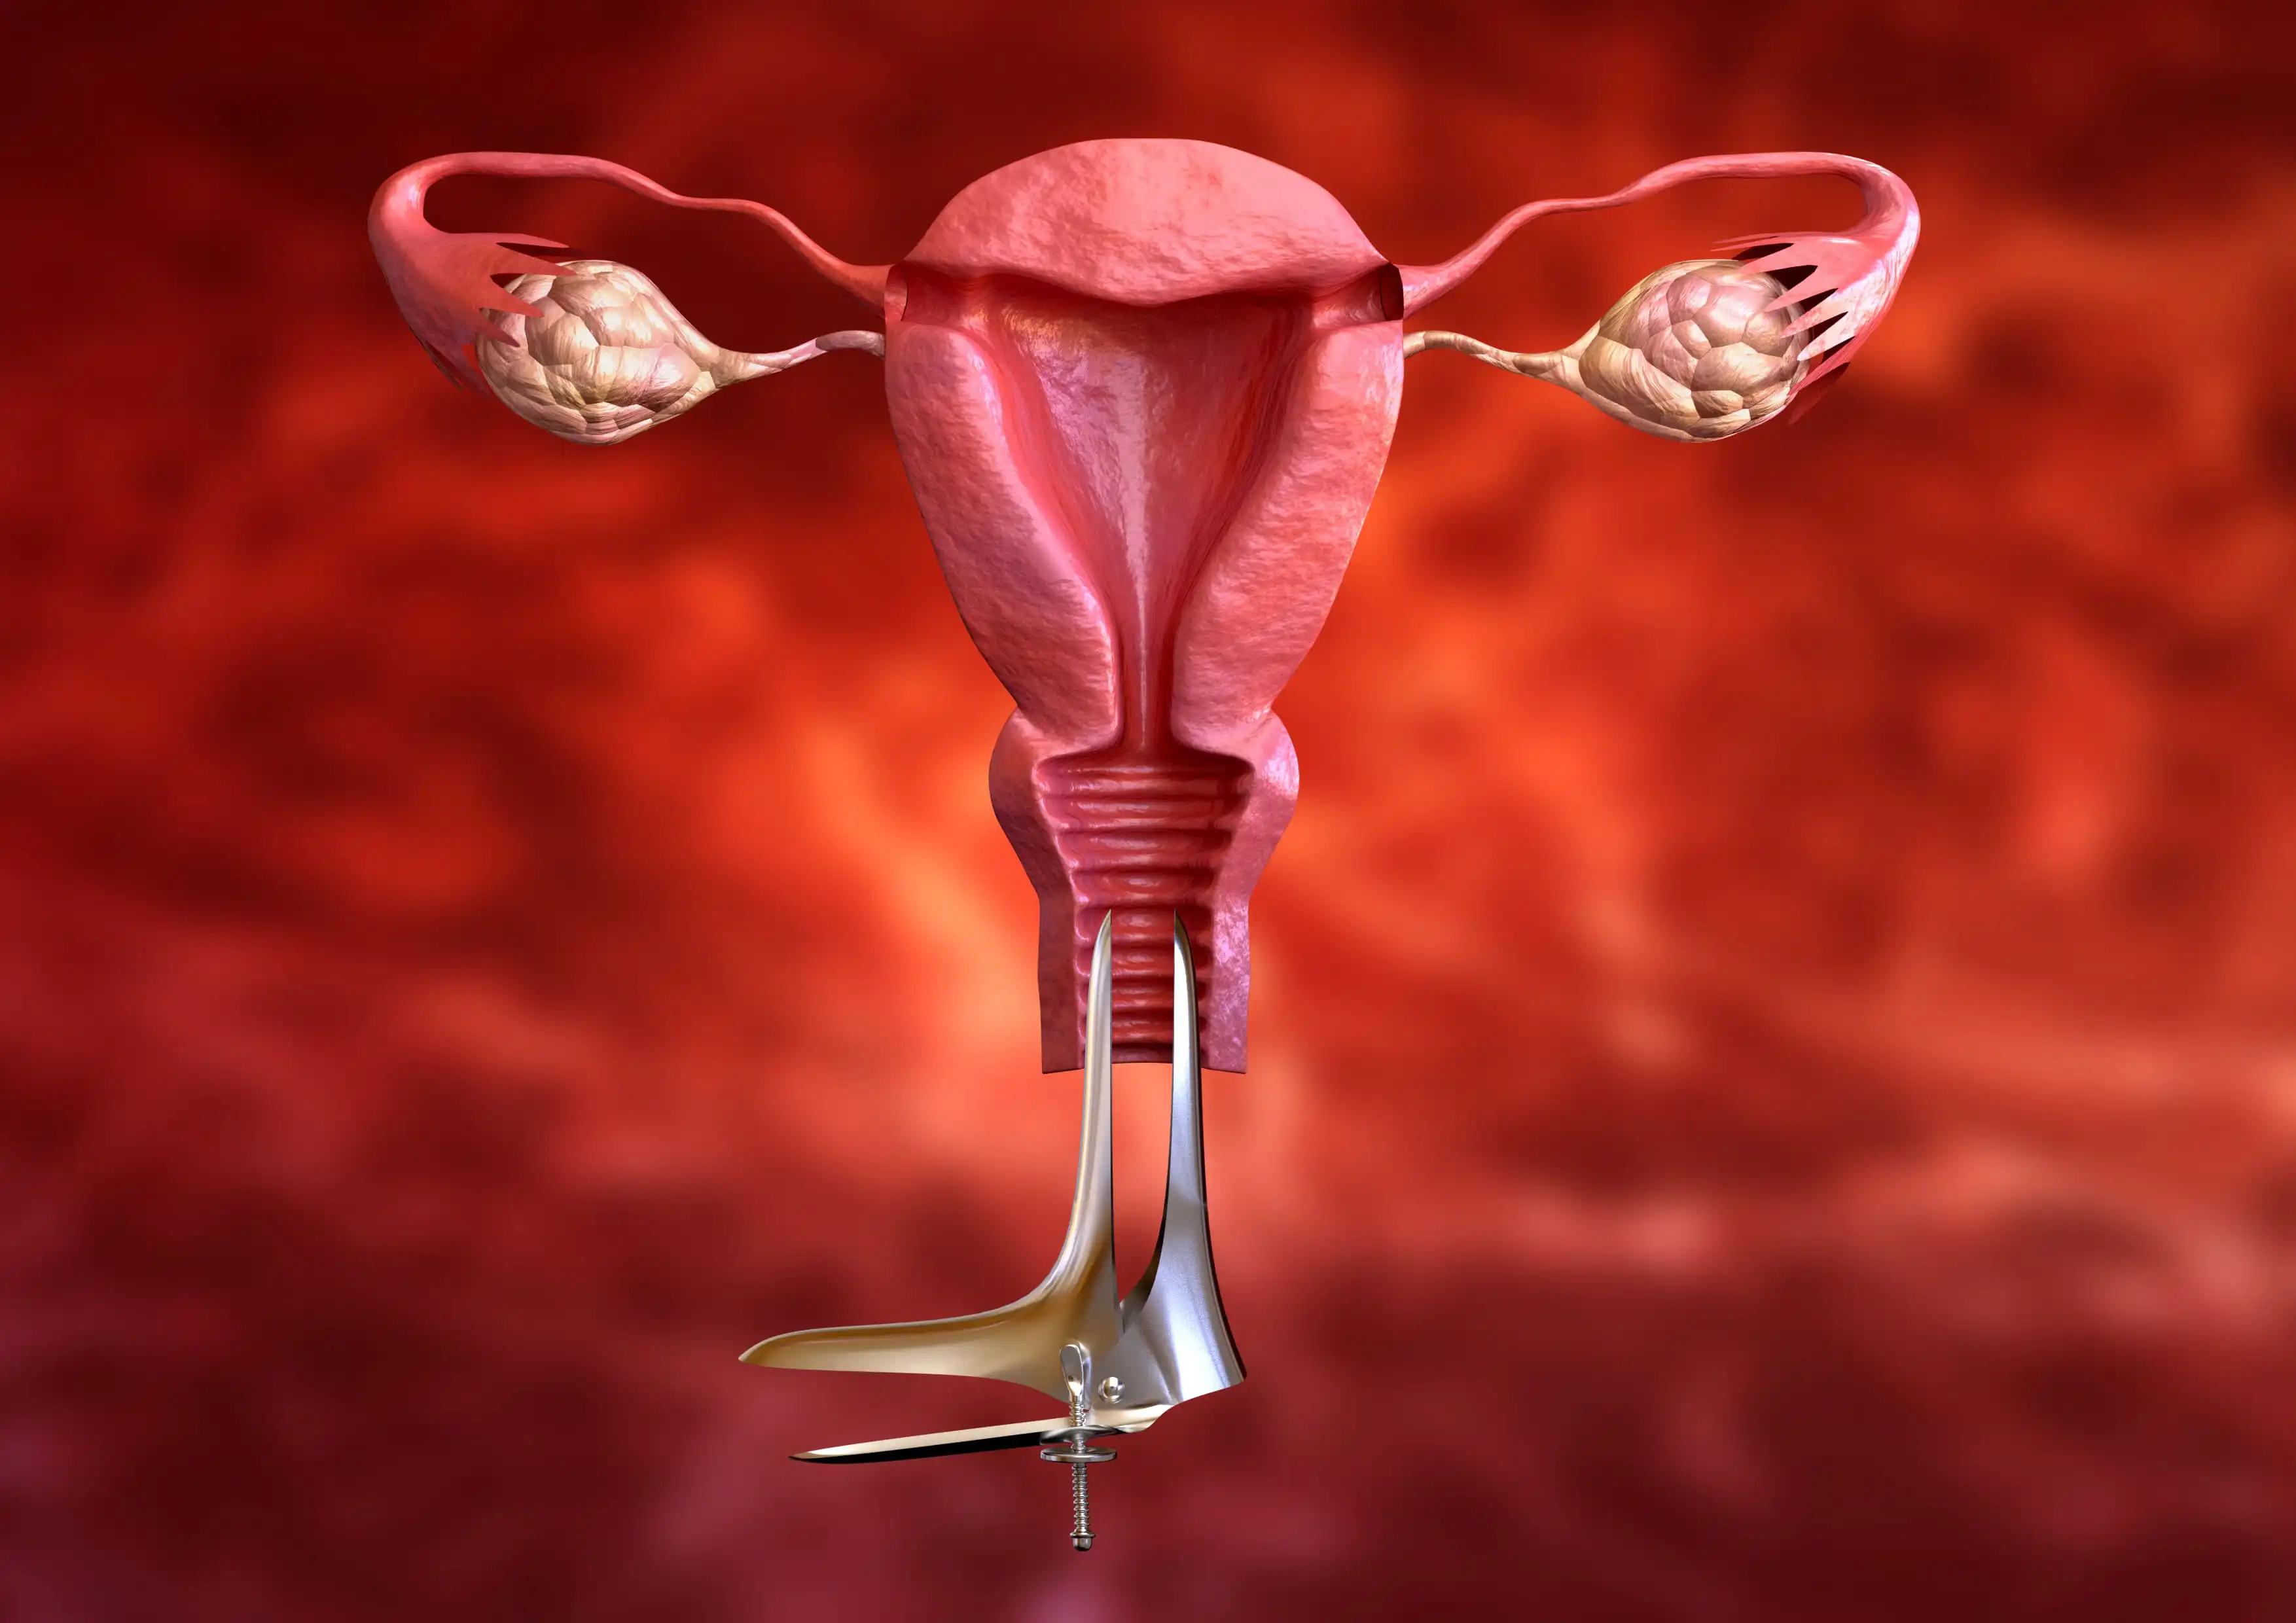 Cervical Cancer Screening Through Pap Smear Test